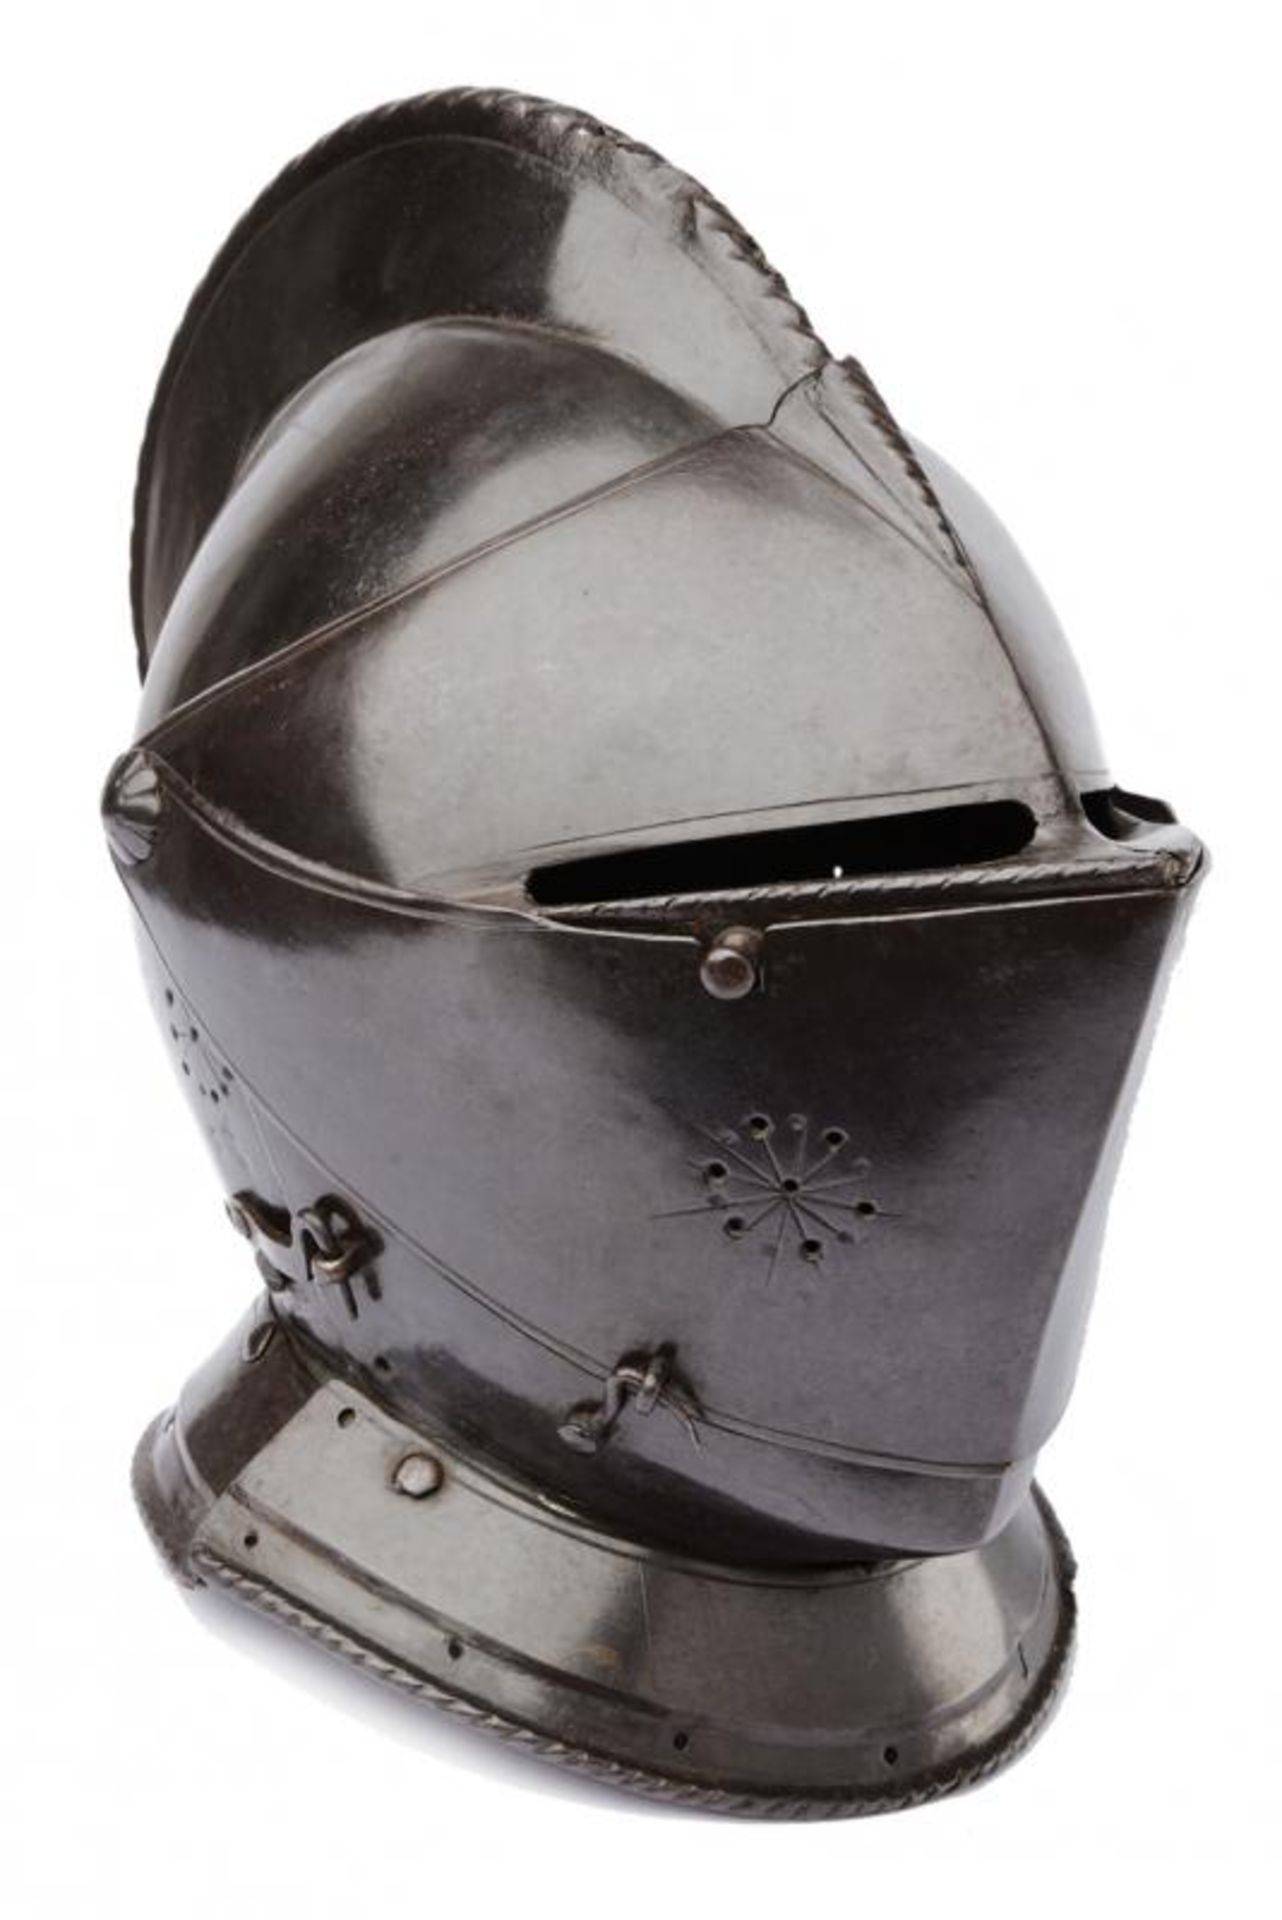 A closed cavalry helmet